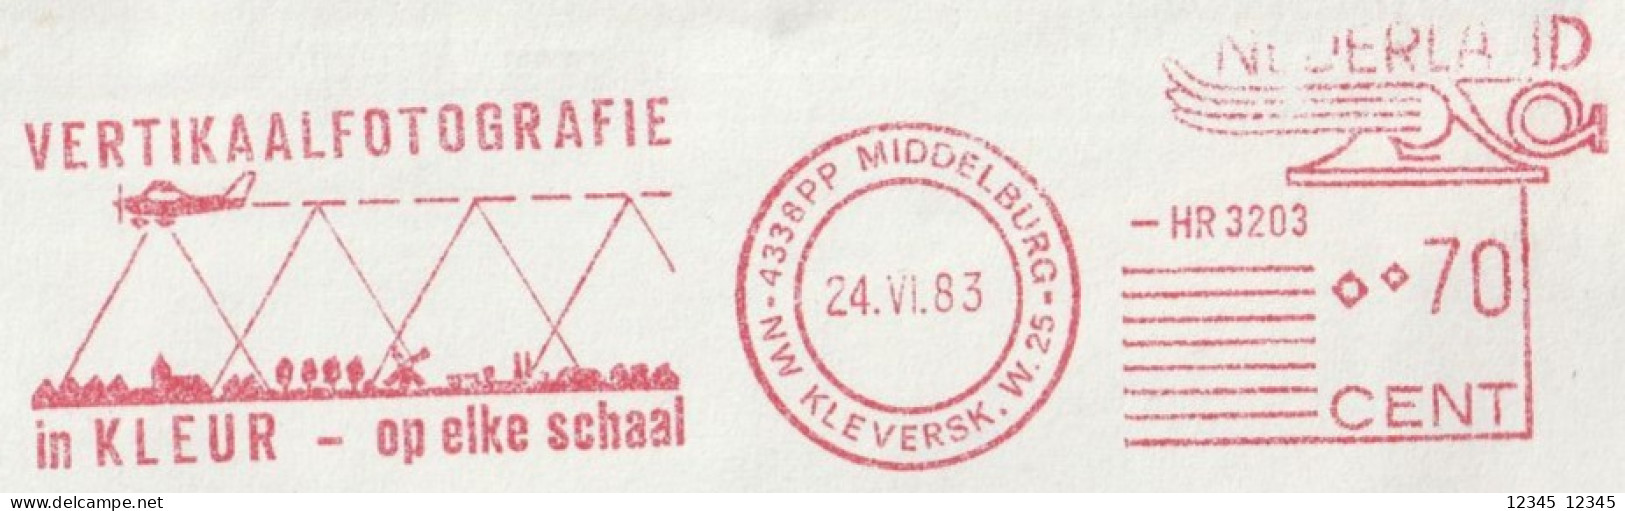 Nederland 1983, Middelburg, Stamped Color Vertical Photography At Any Scale - Maschinenstempel (EMA)